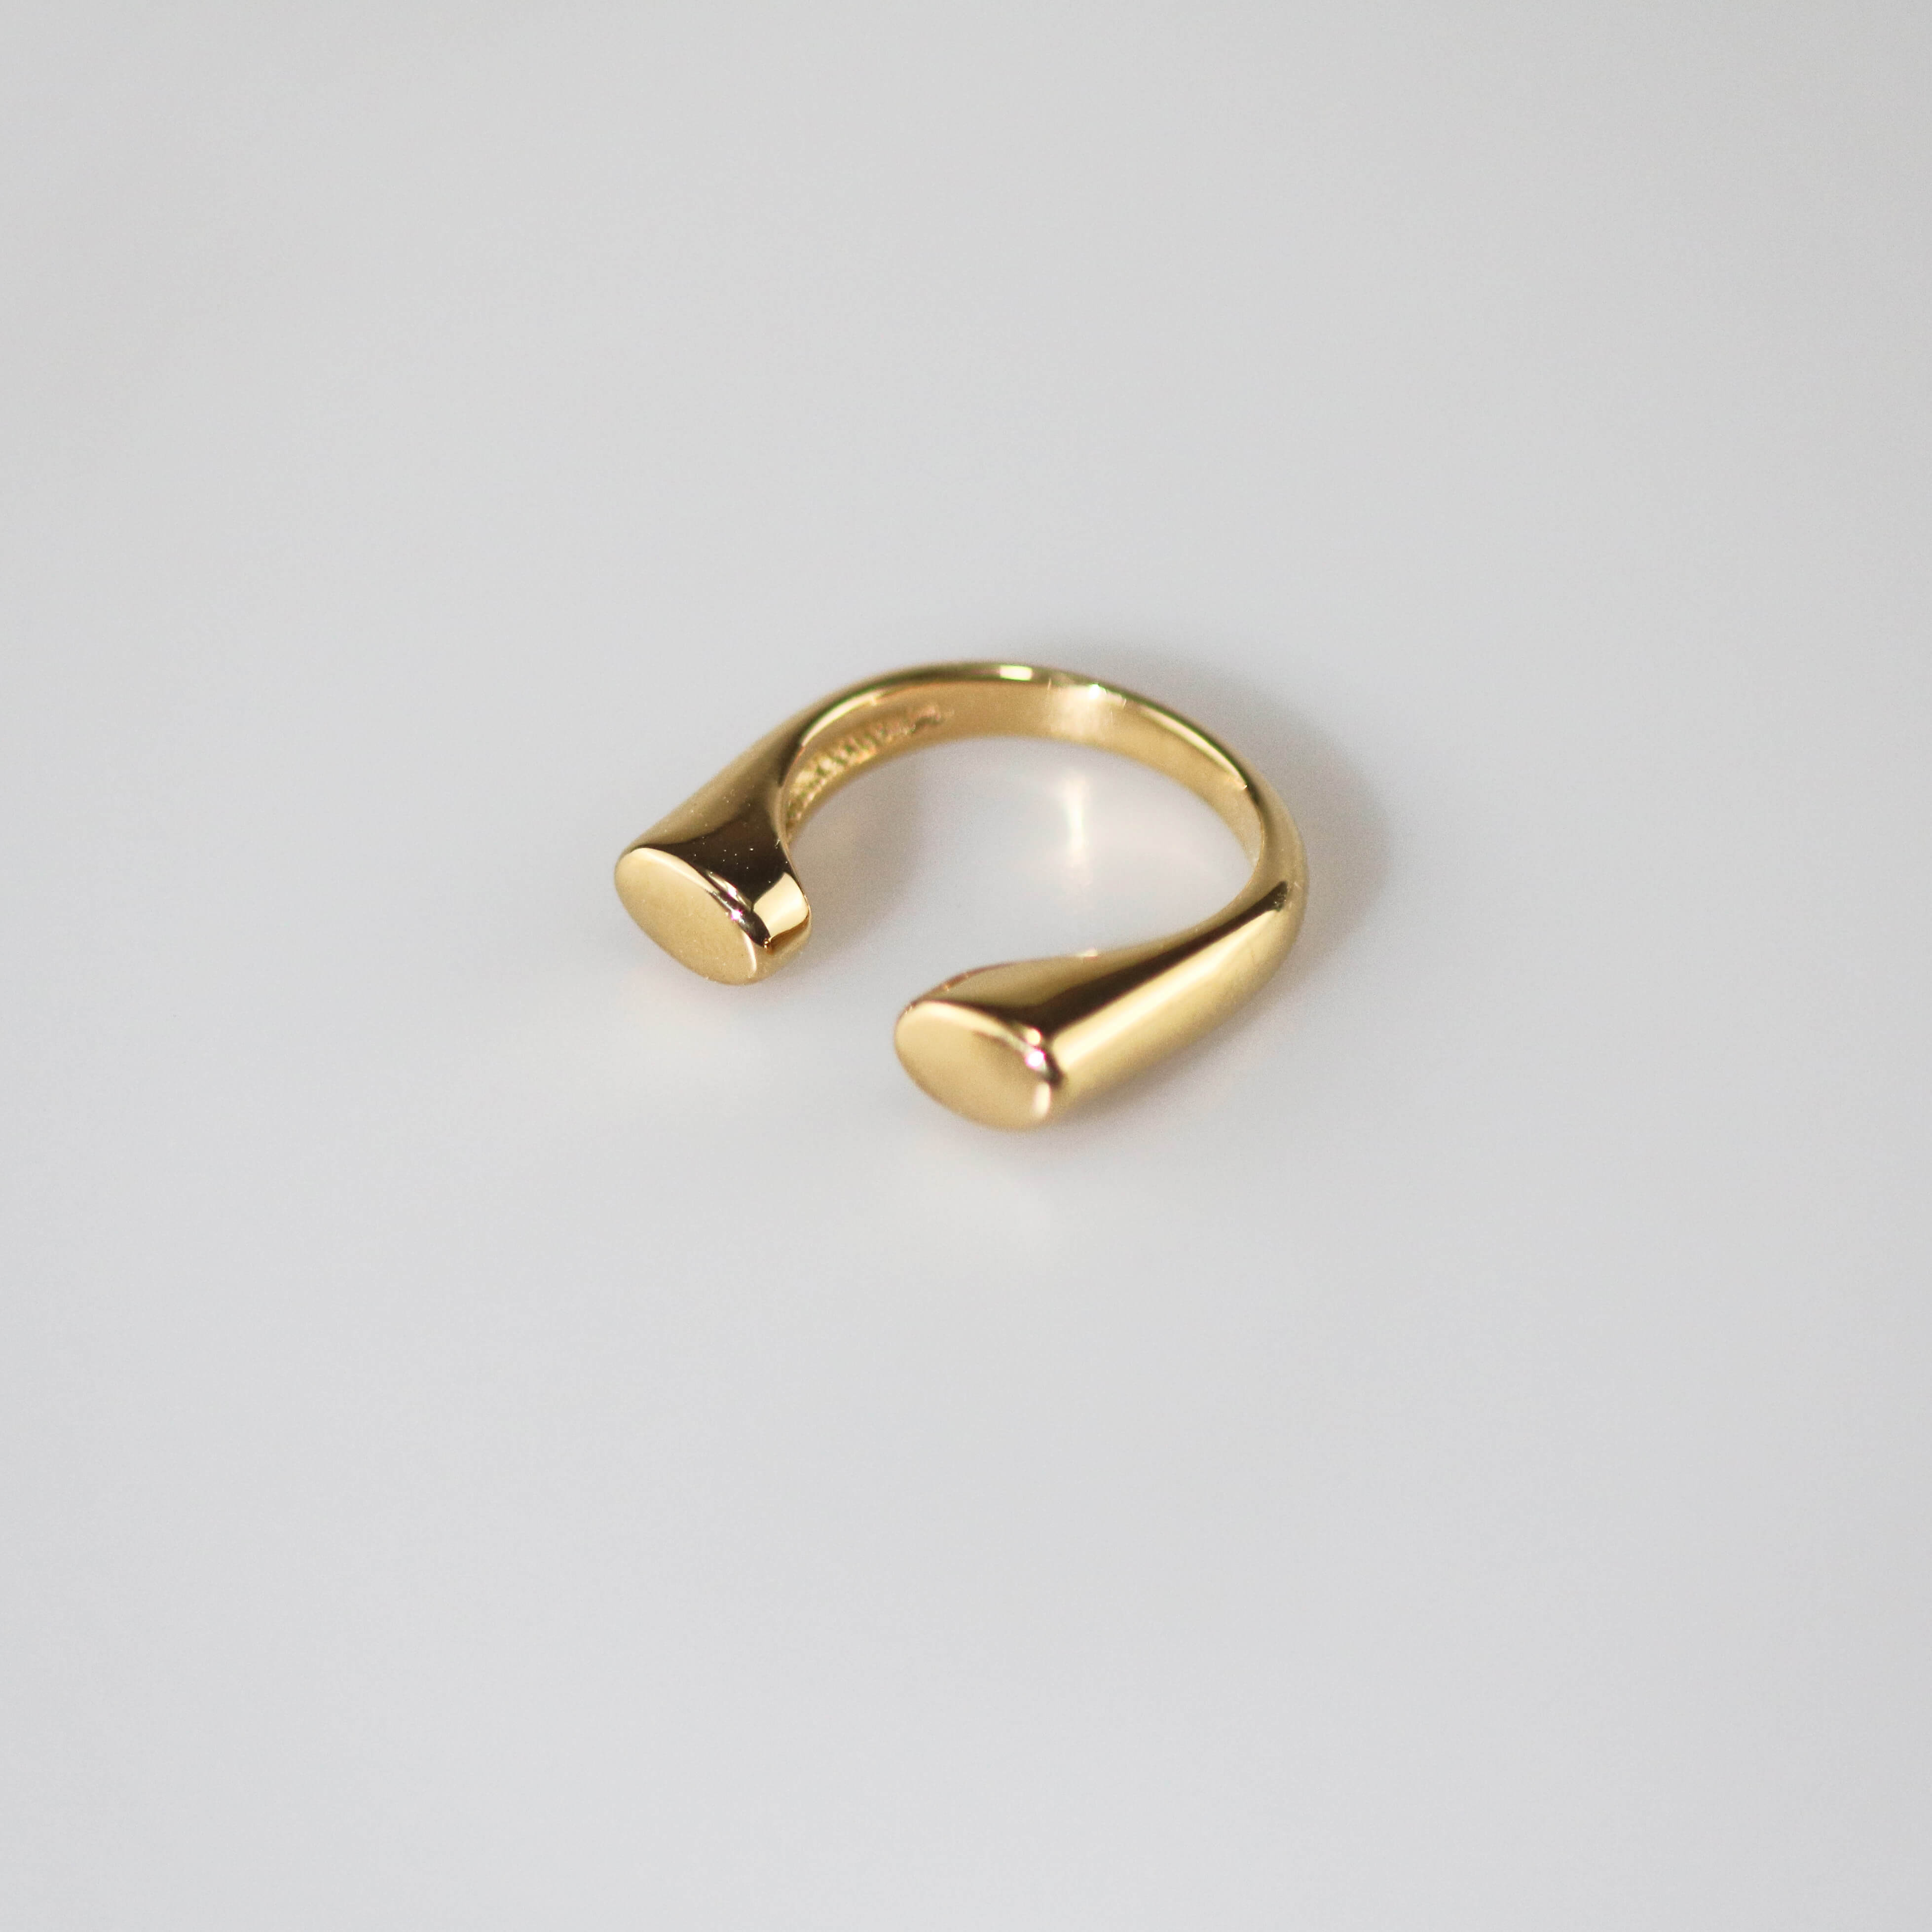 Meideya jewelry U shaped sigent ring